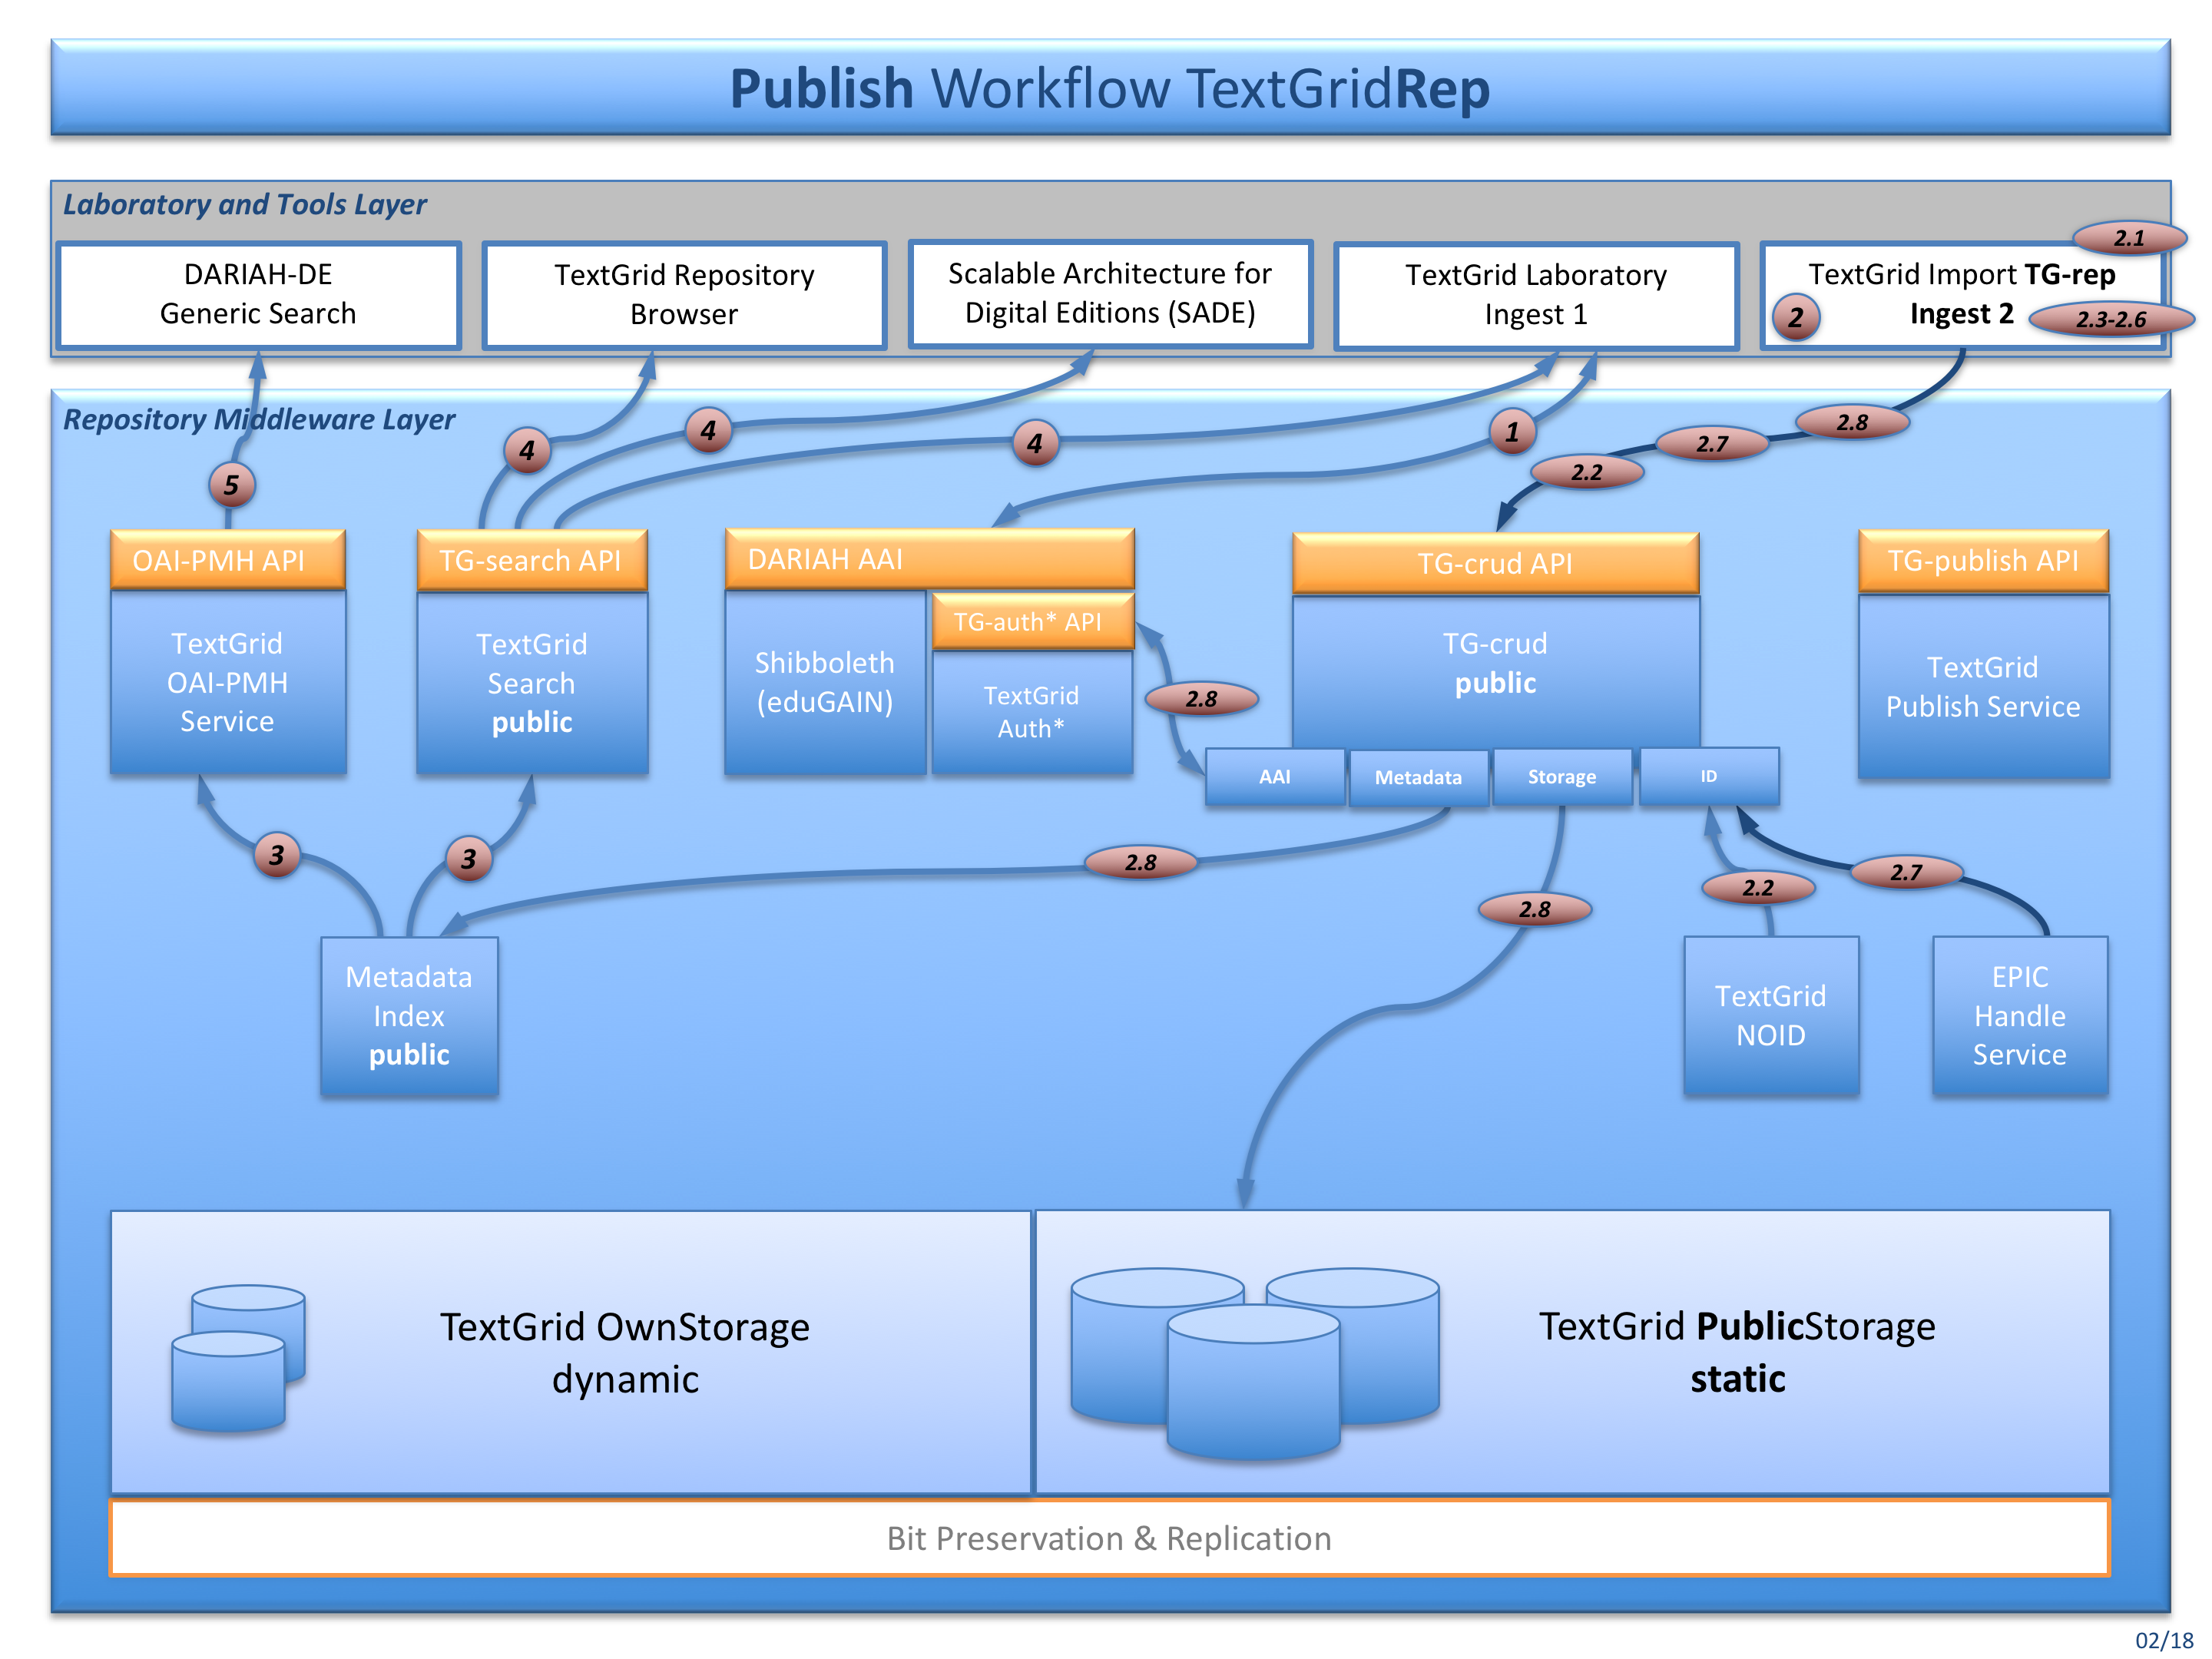 Fig. 4: The publish workflow for publishing data using tools like TG-import (Ingest 2)